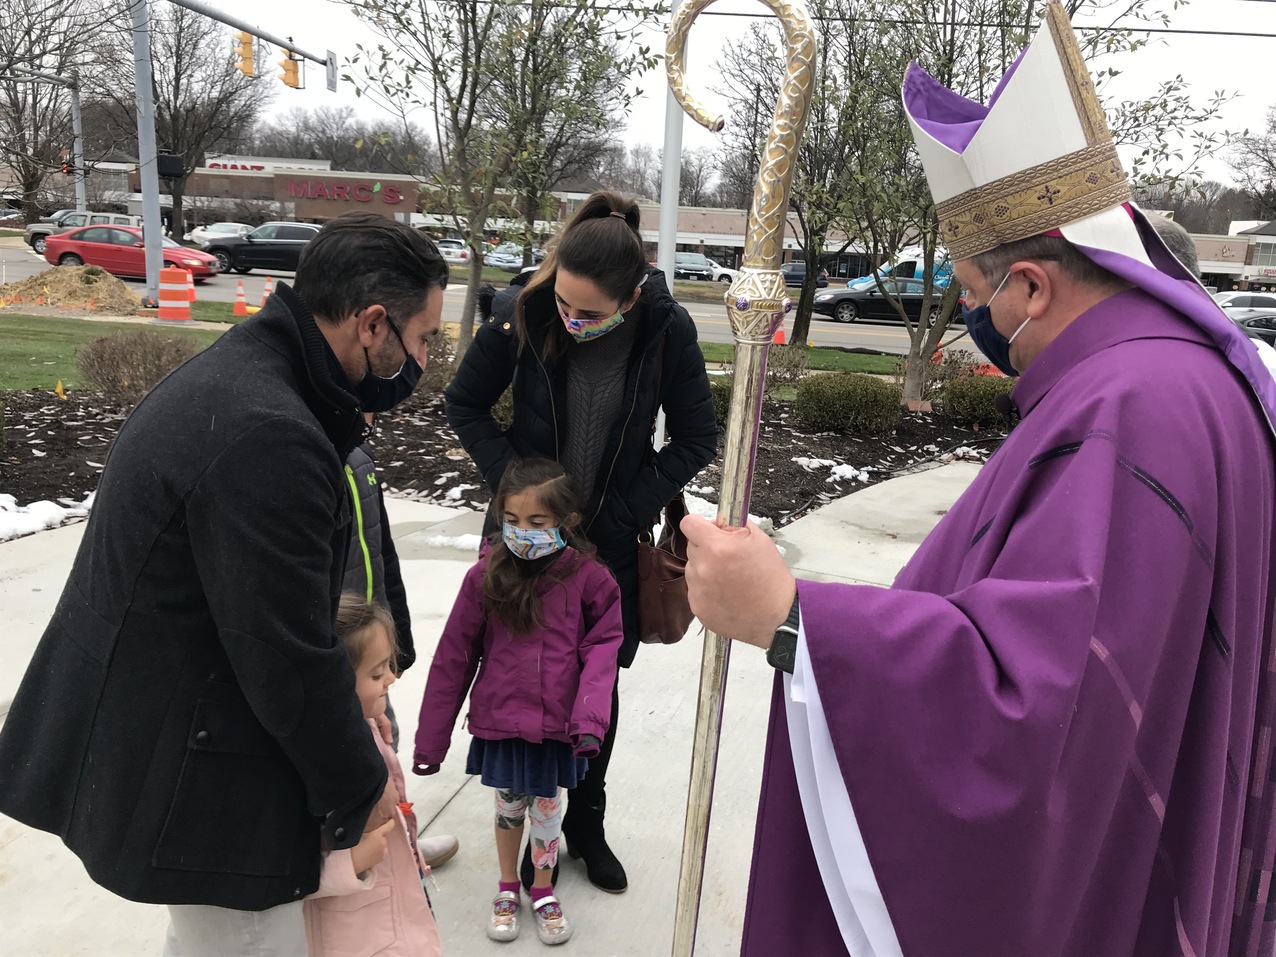 Bishop Malesic celebrates second Sunday of Advent at St. Hilary Parish 